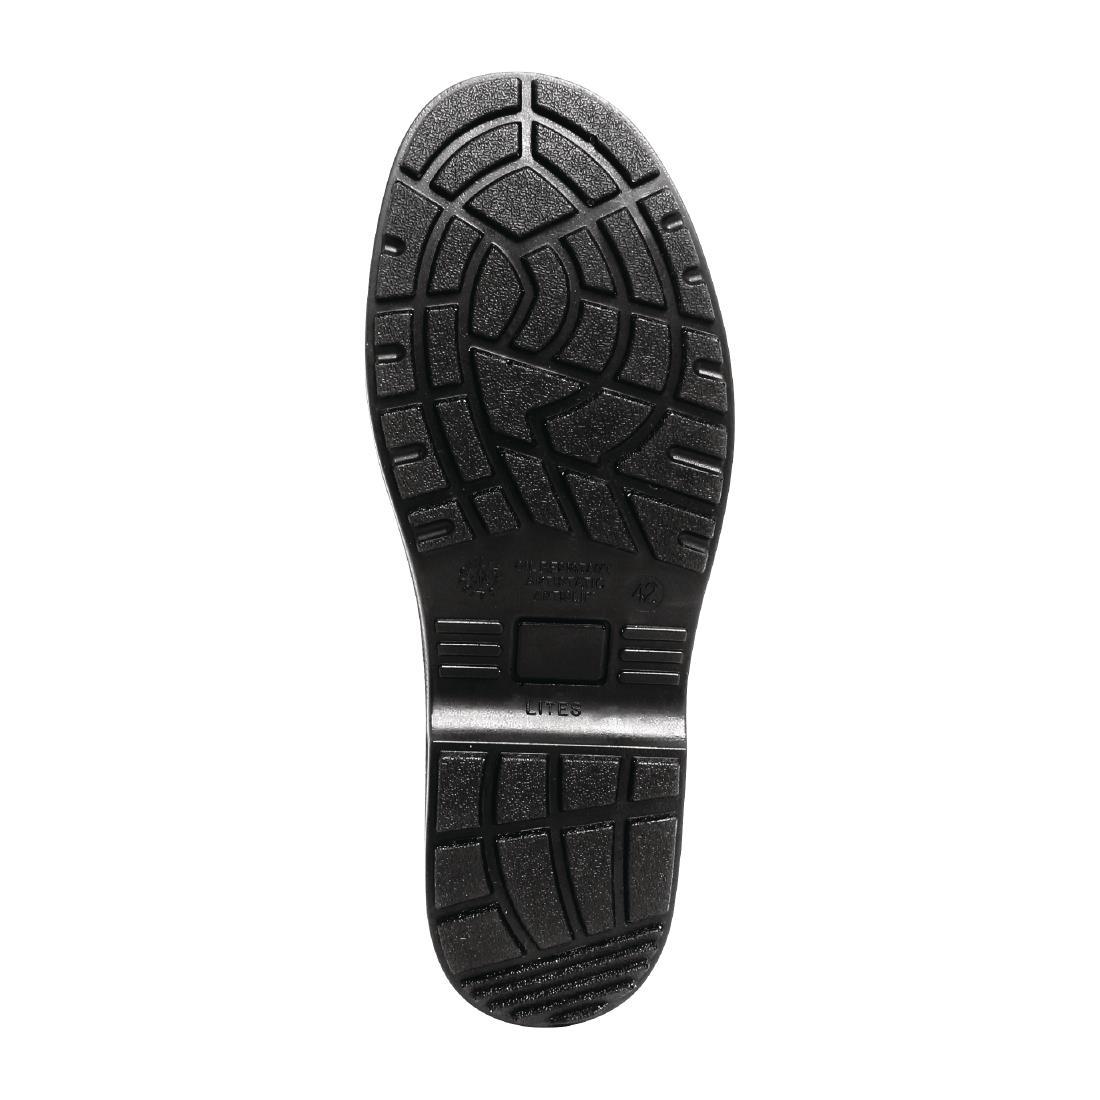 Slipbuster Lite Slip On Safety Shoes Black 36 - A845-36  - 3